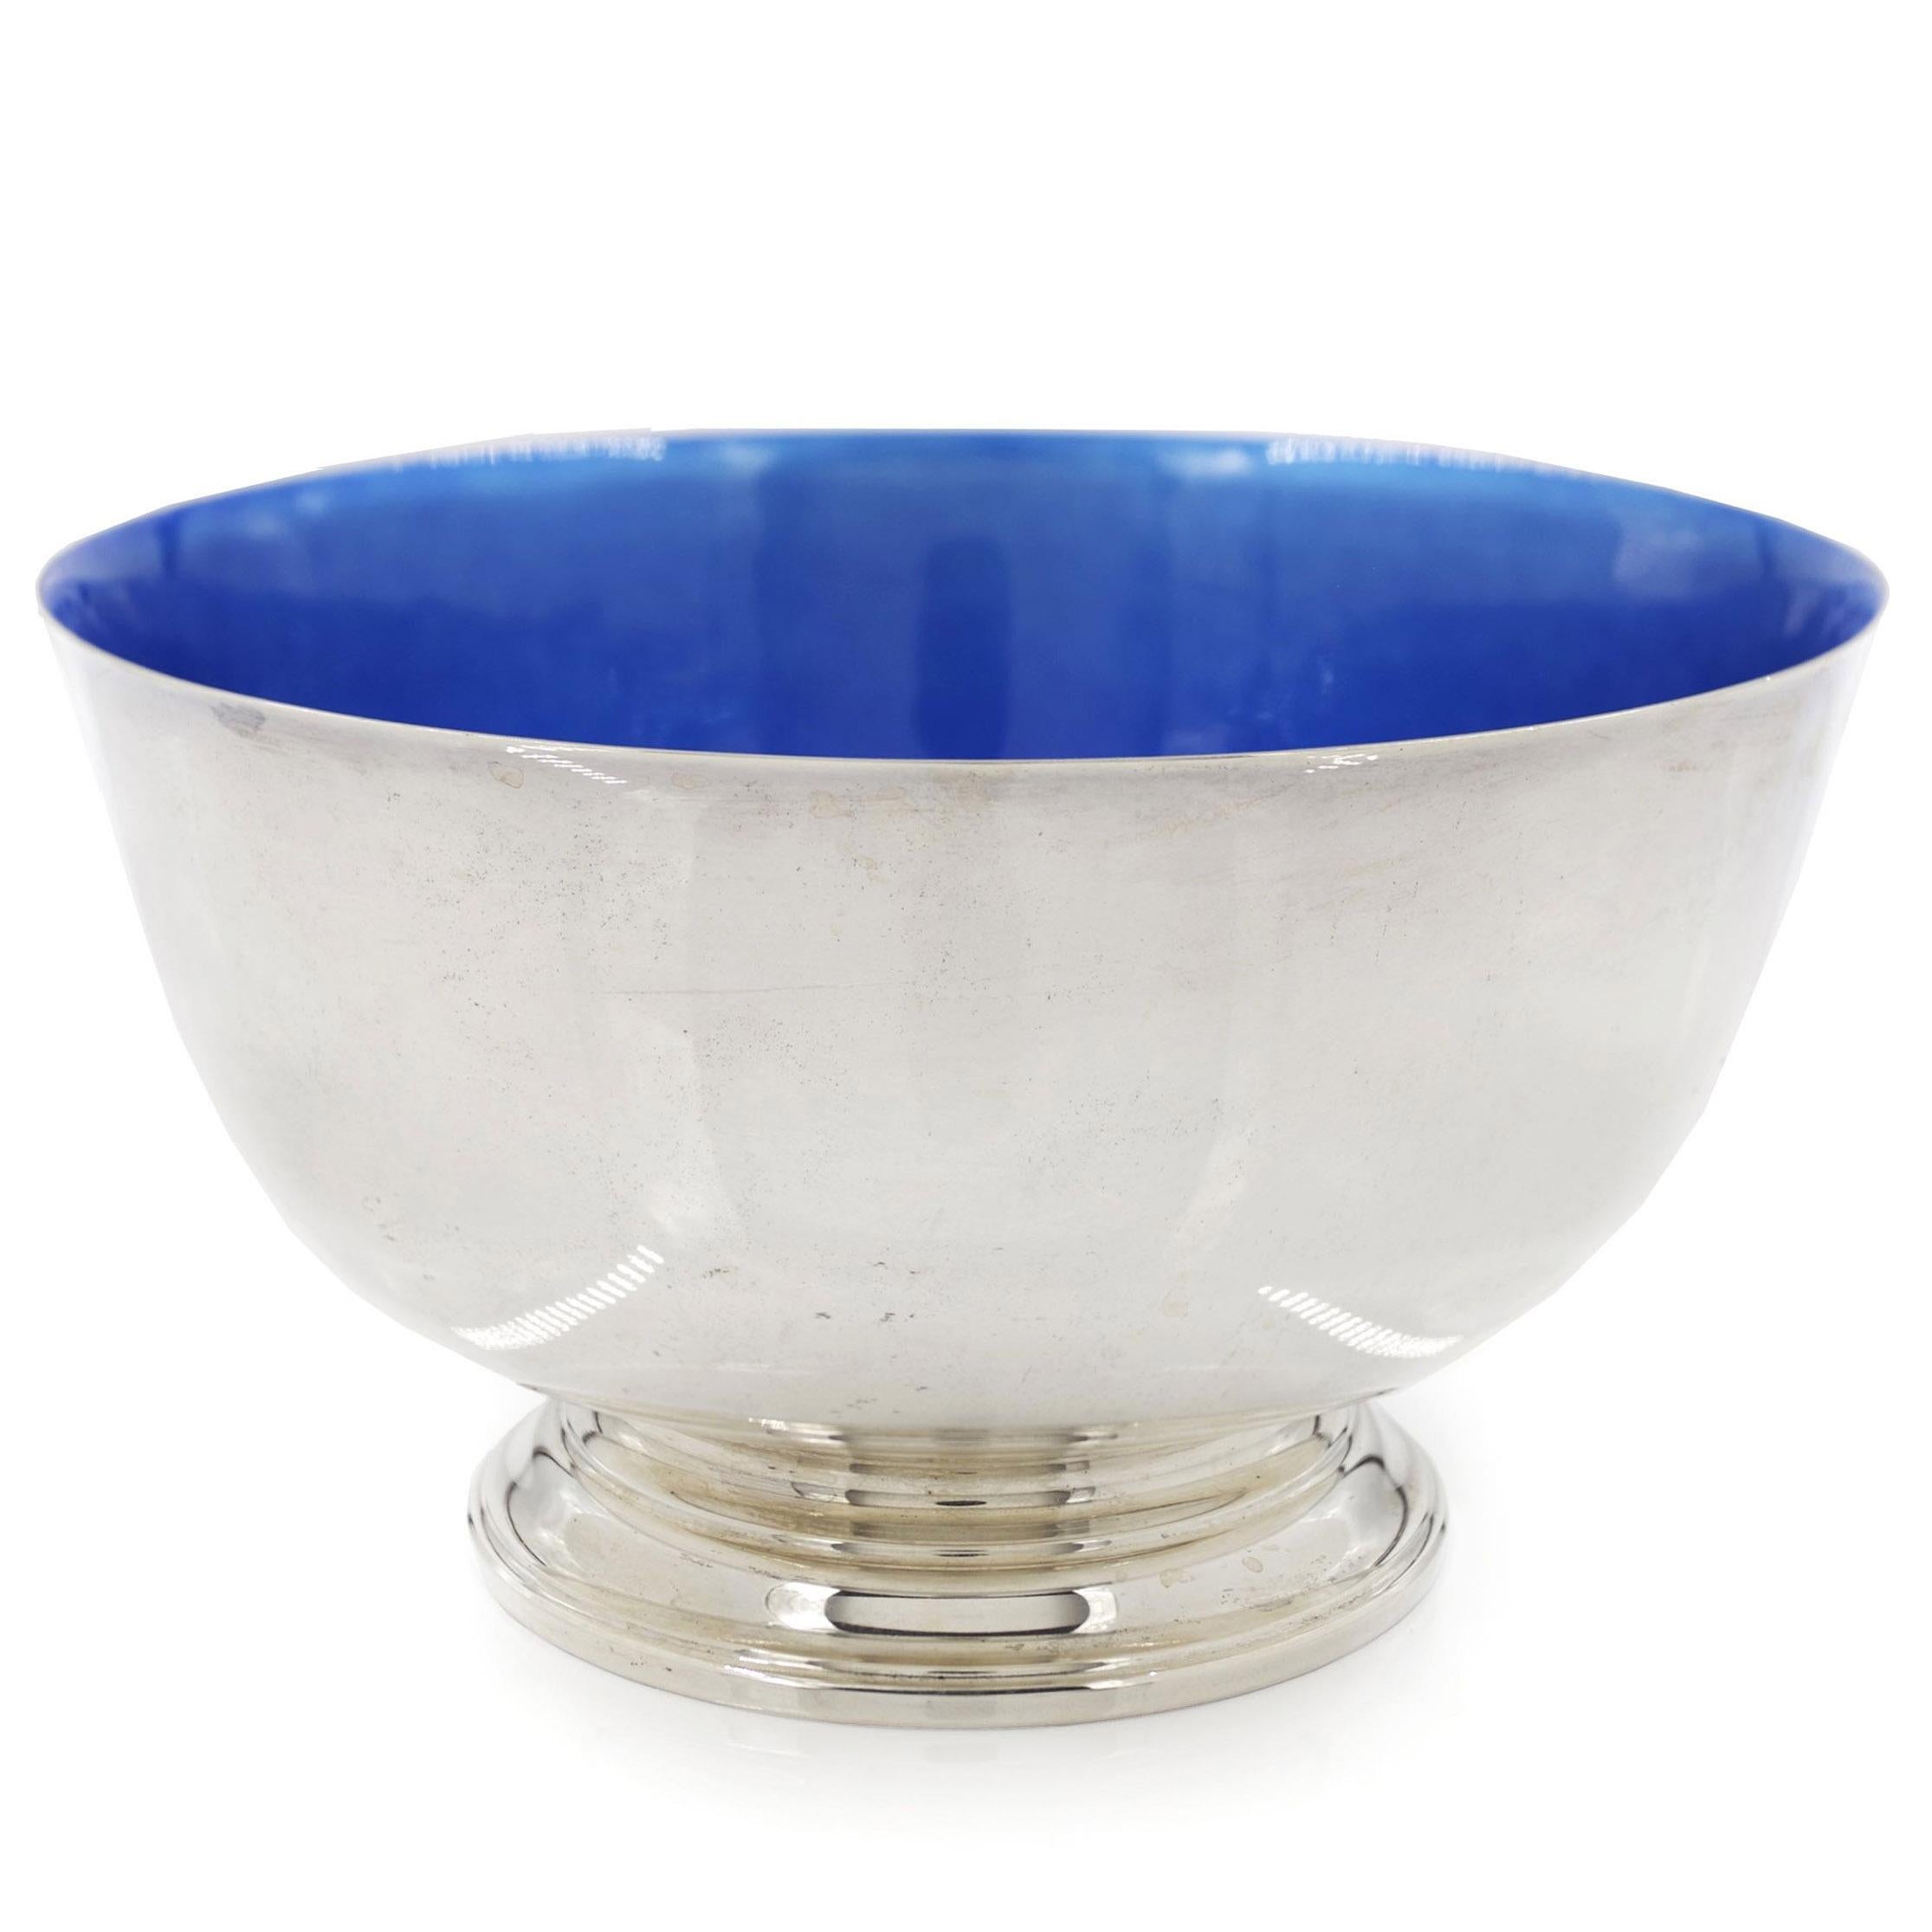 towle silver bowl